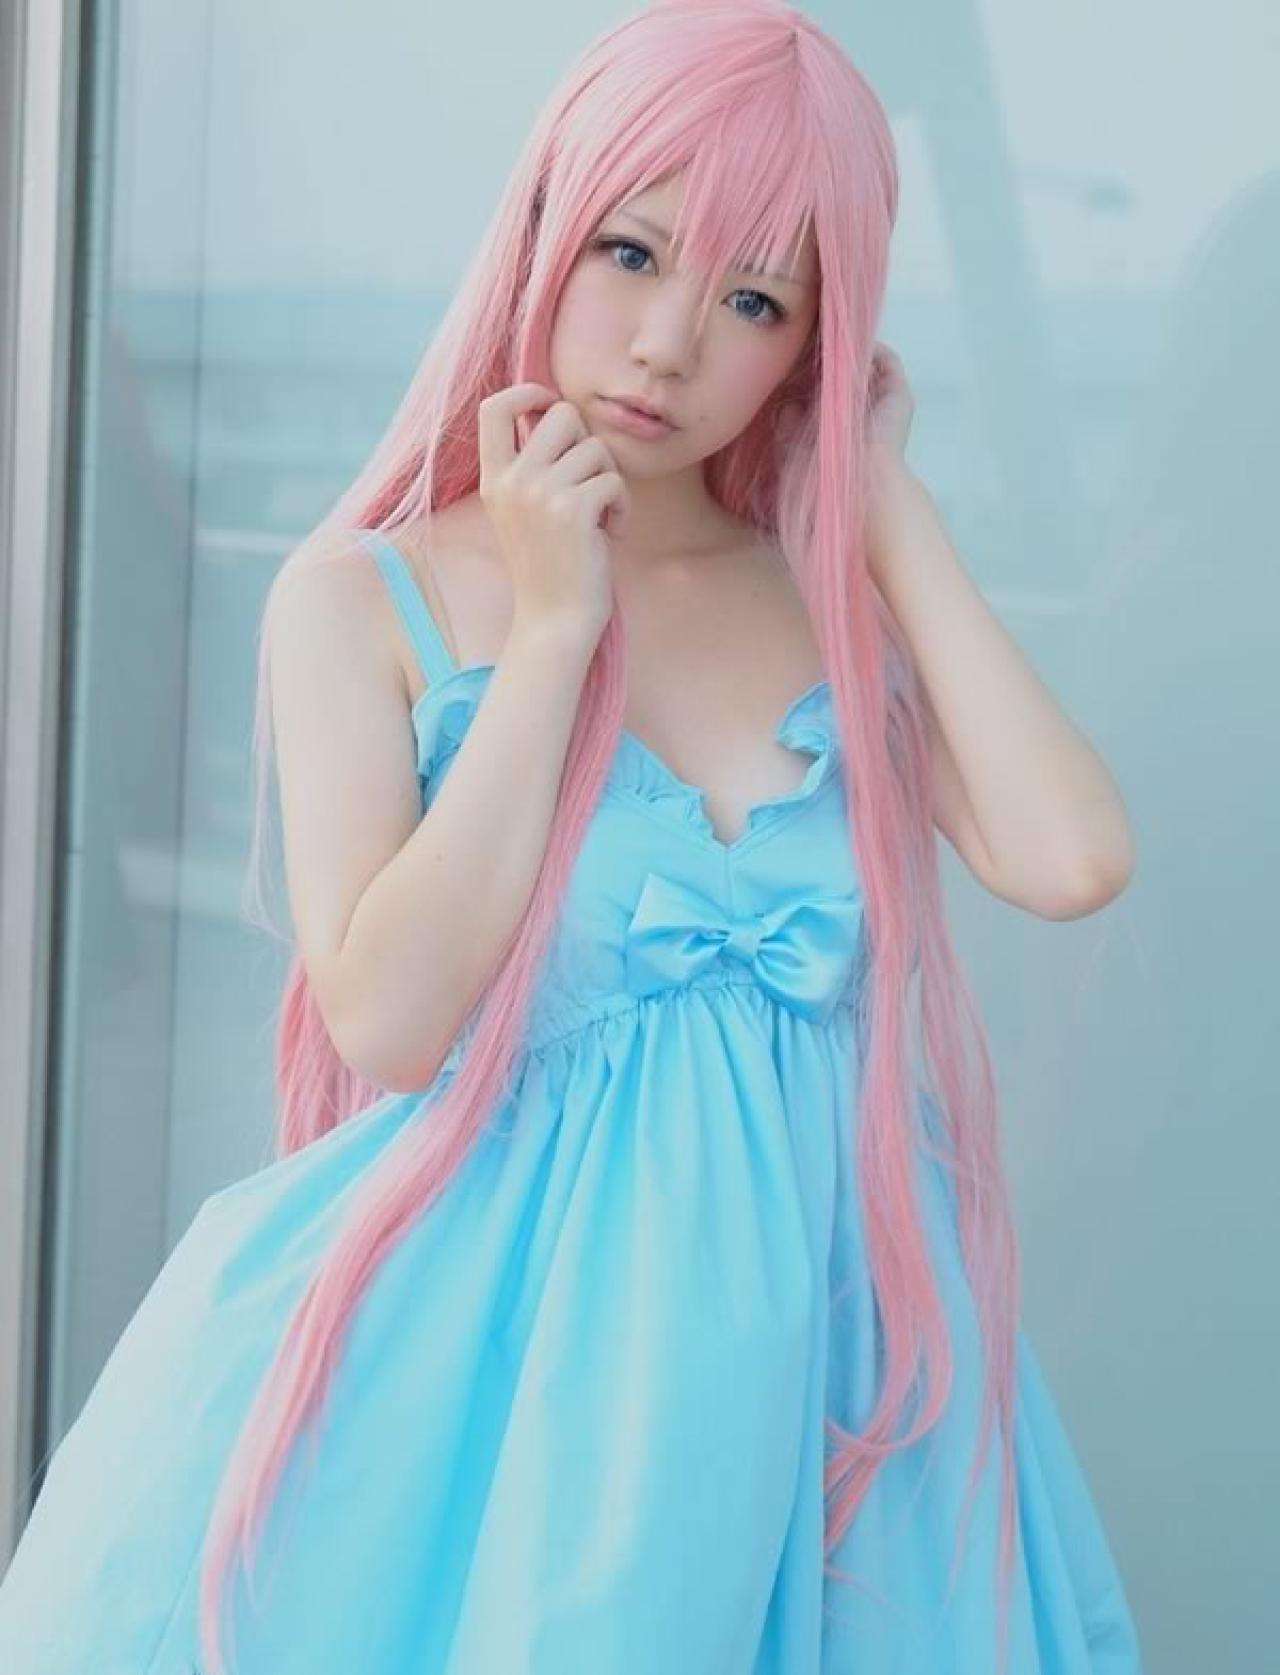 Miyabi粉色短发身穿淡蓝色短裙扮演巡音露卡挠着头，很疑惑的样子